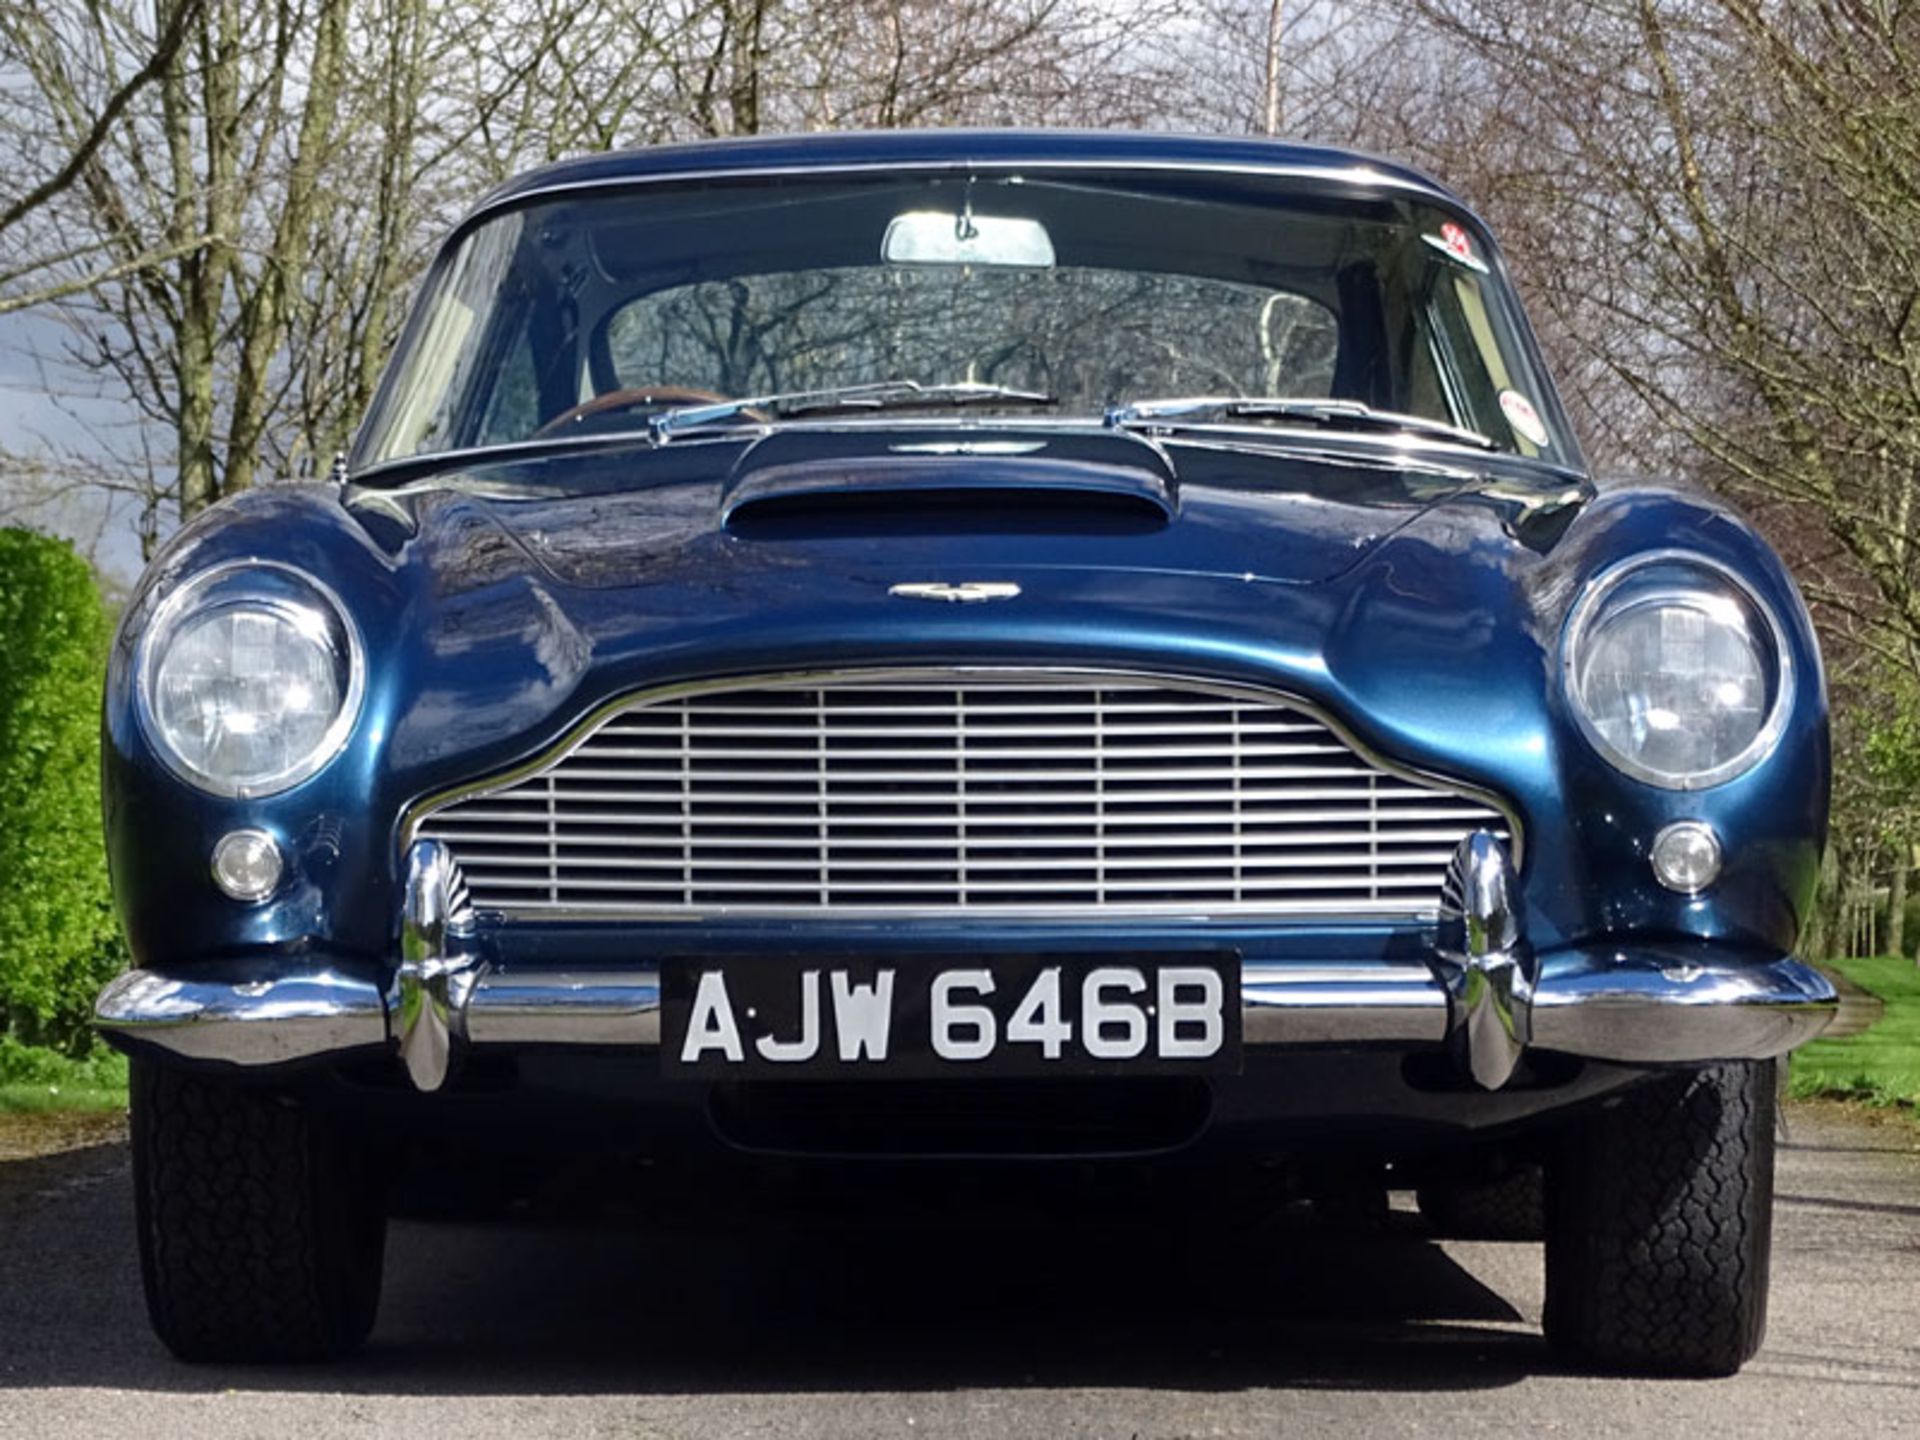 1964 Aston Martin DB5 - Image 2 of 15